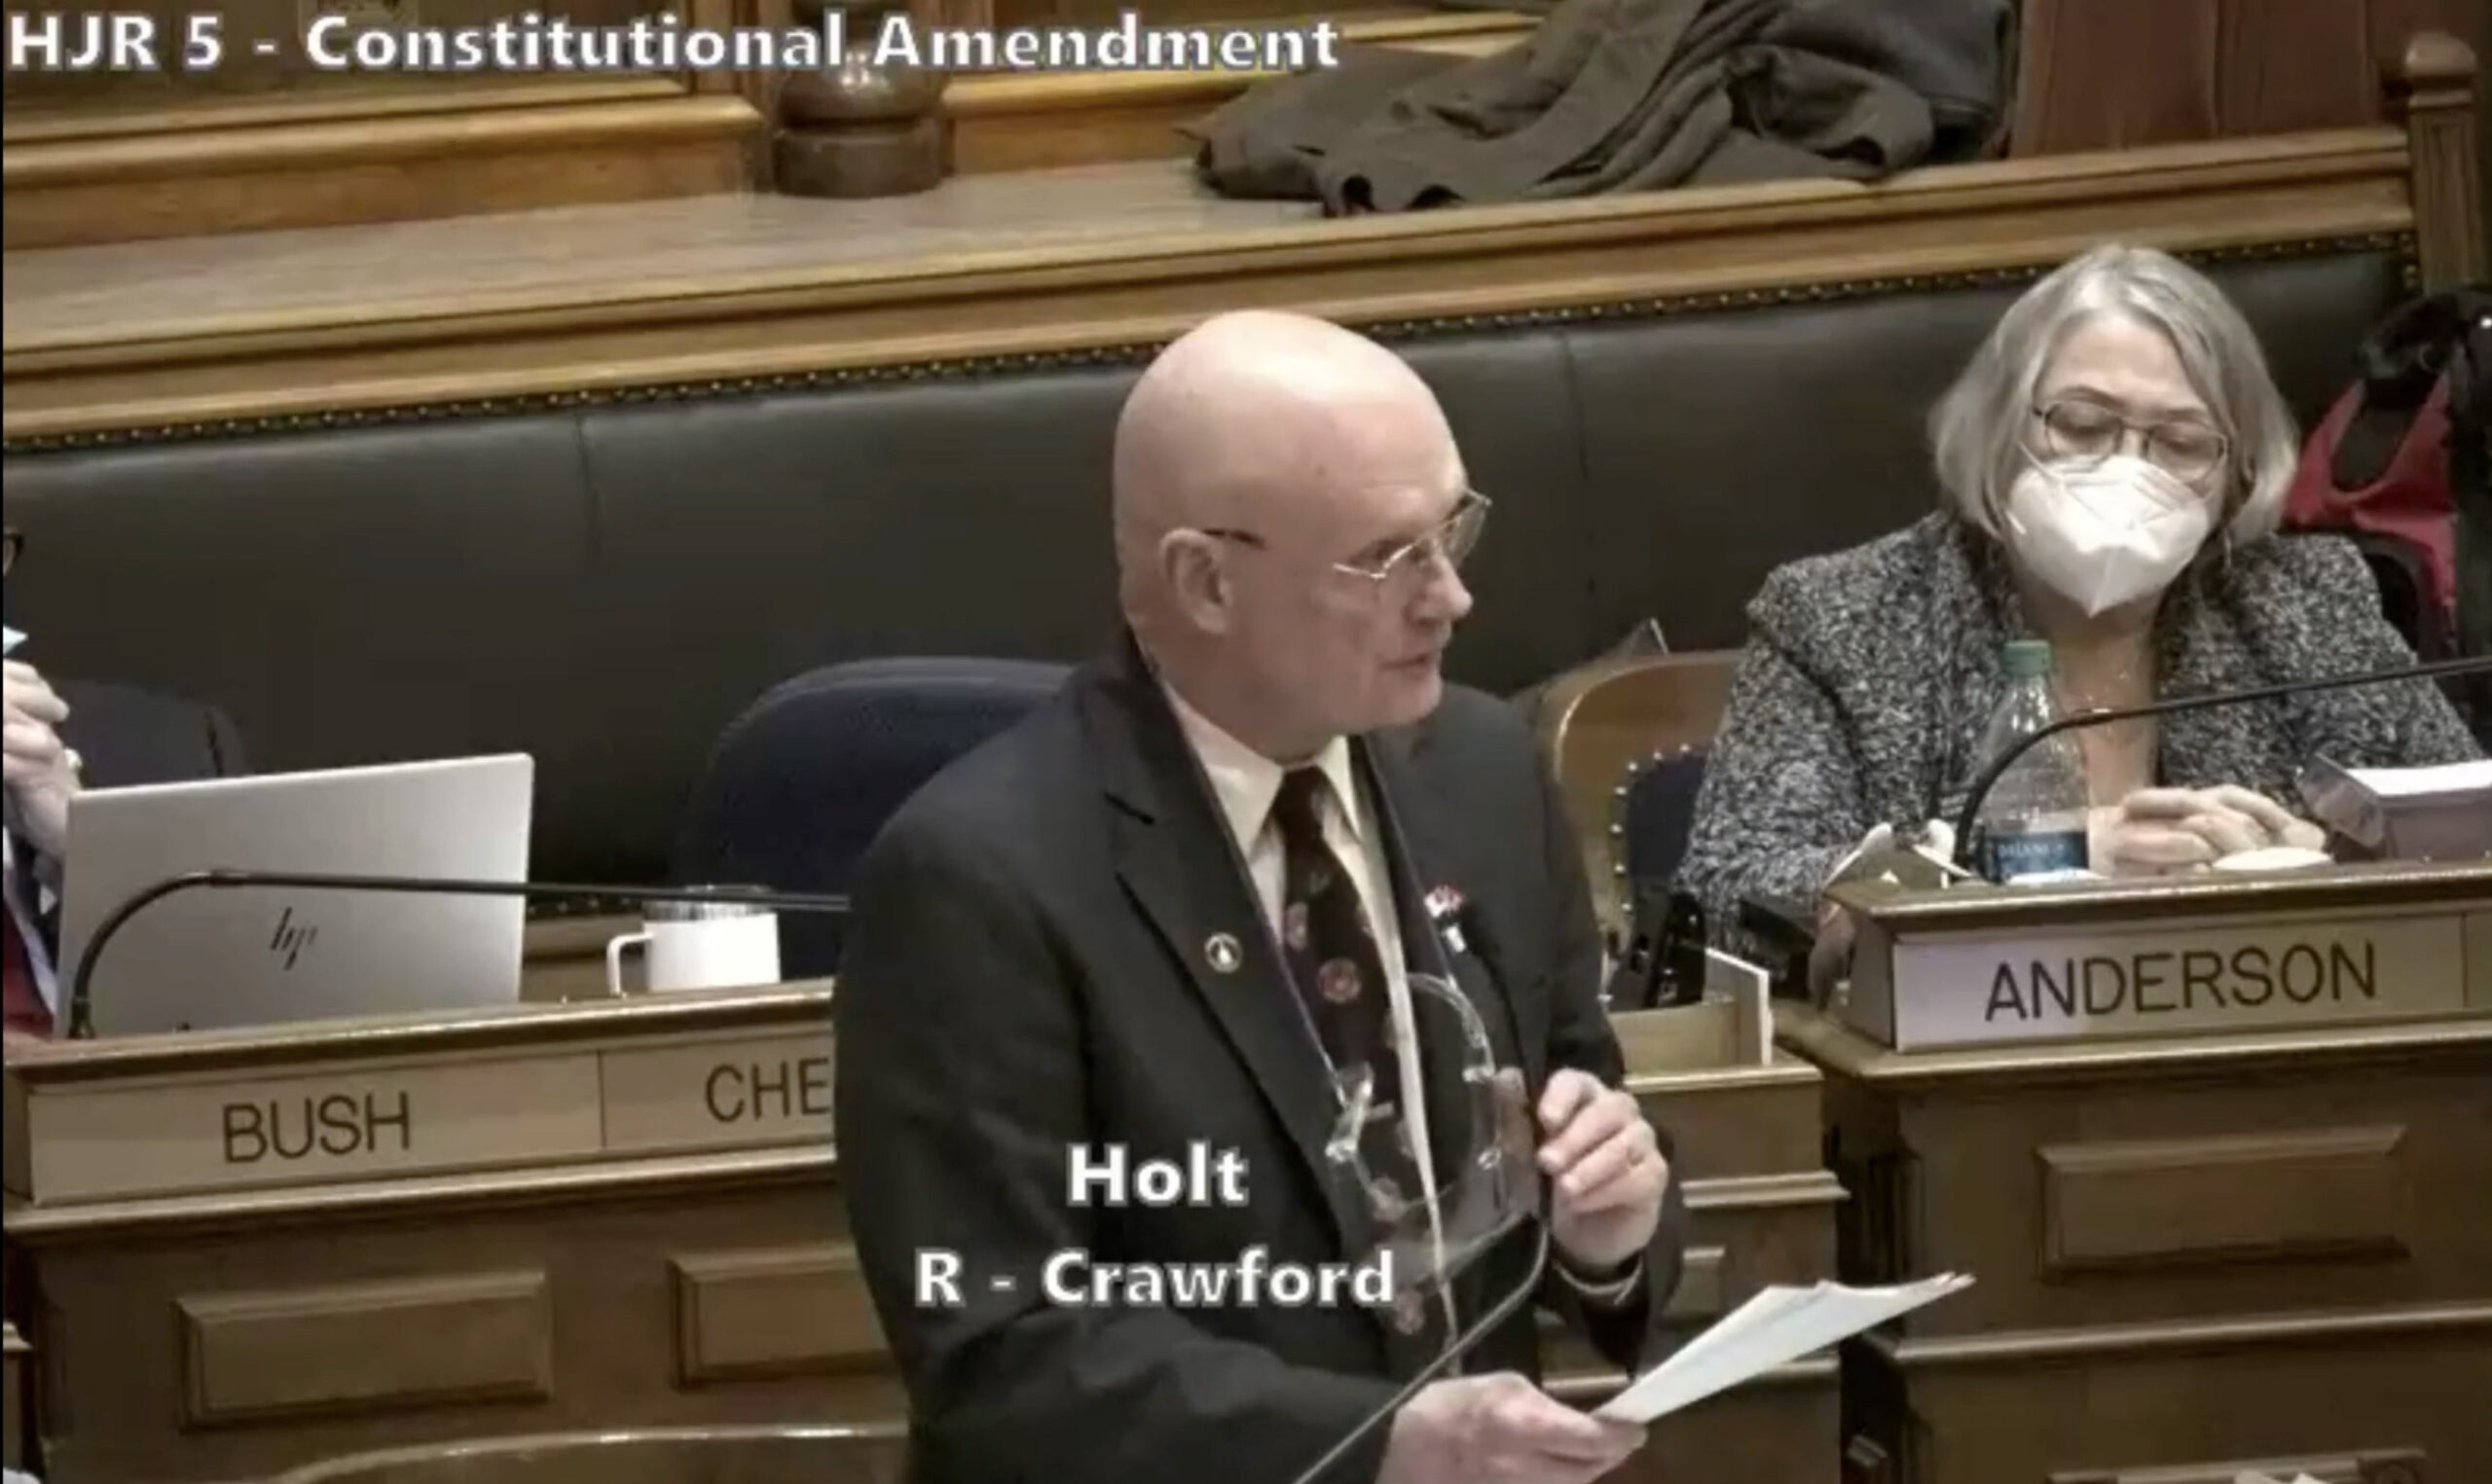 VIDEO: Rep. Holt shreds lies about Protect Life Amendment